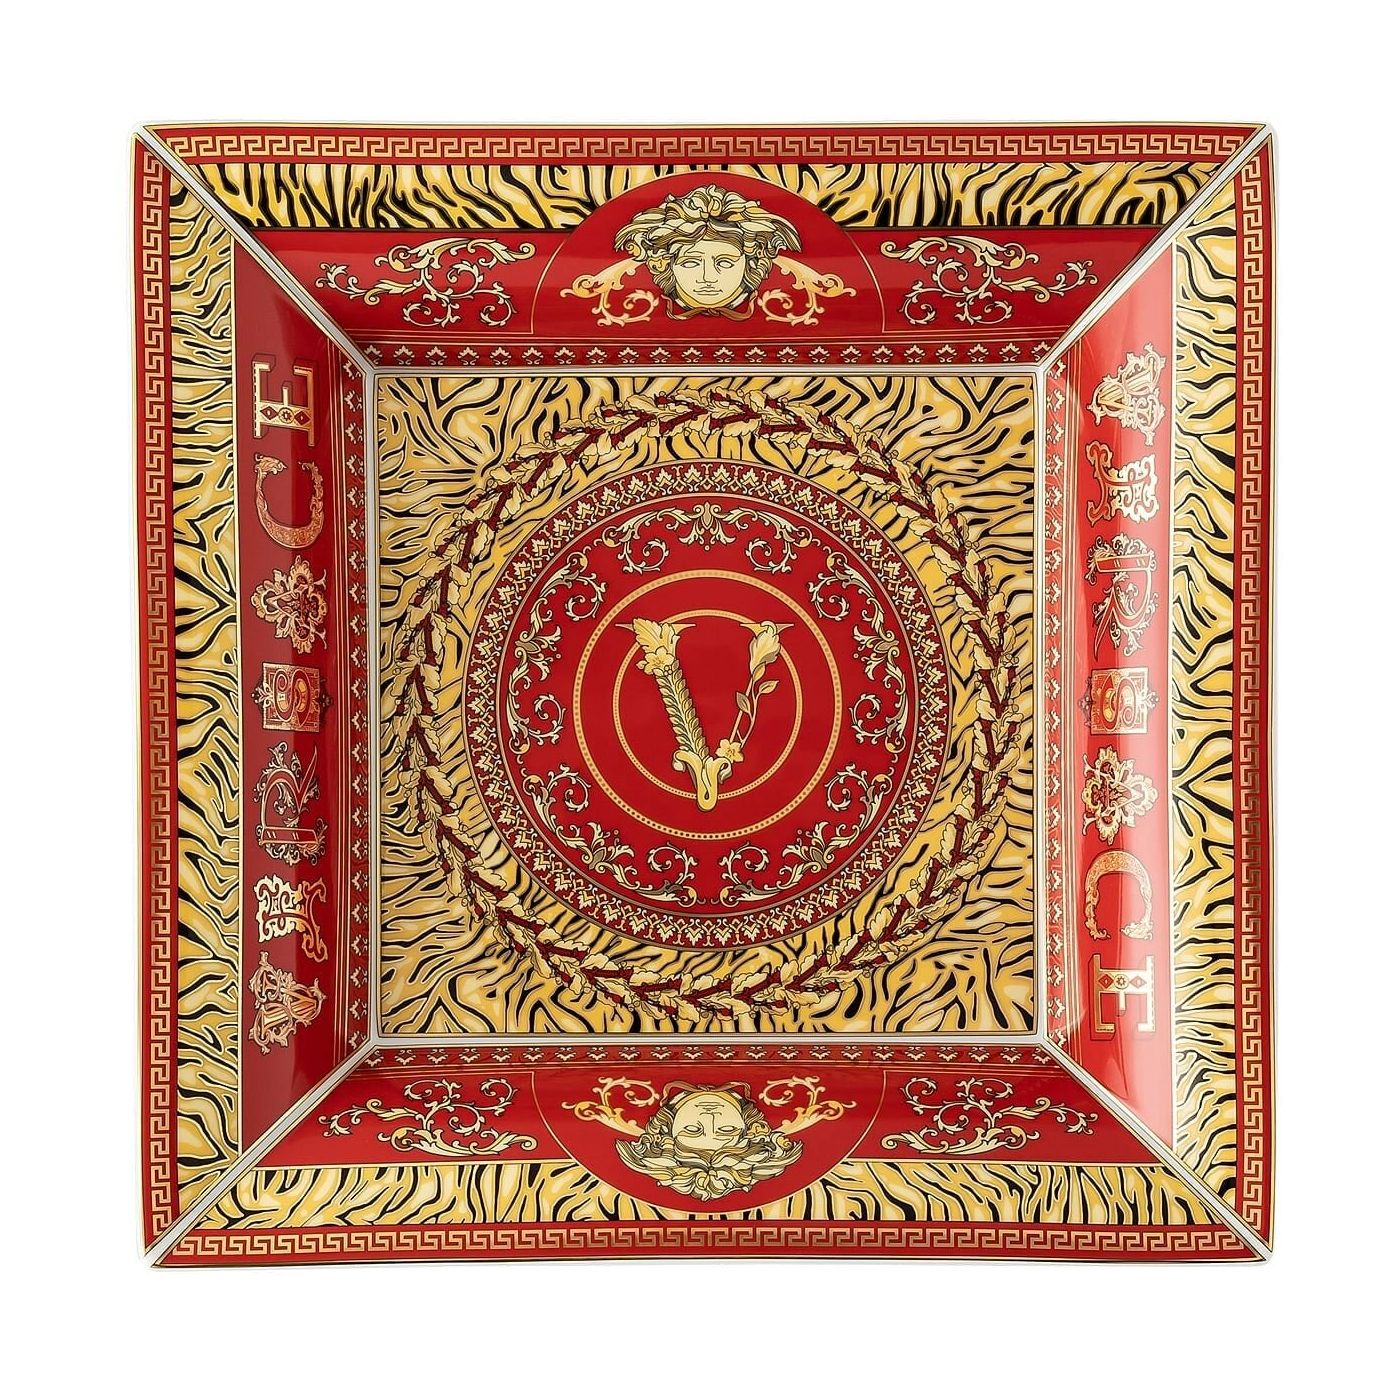 Virtus Holiday Coppa 28 cm Versace